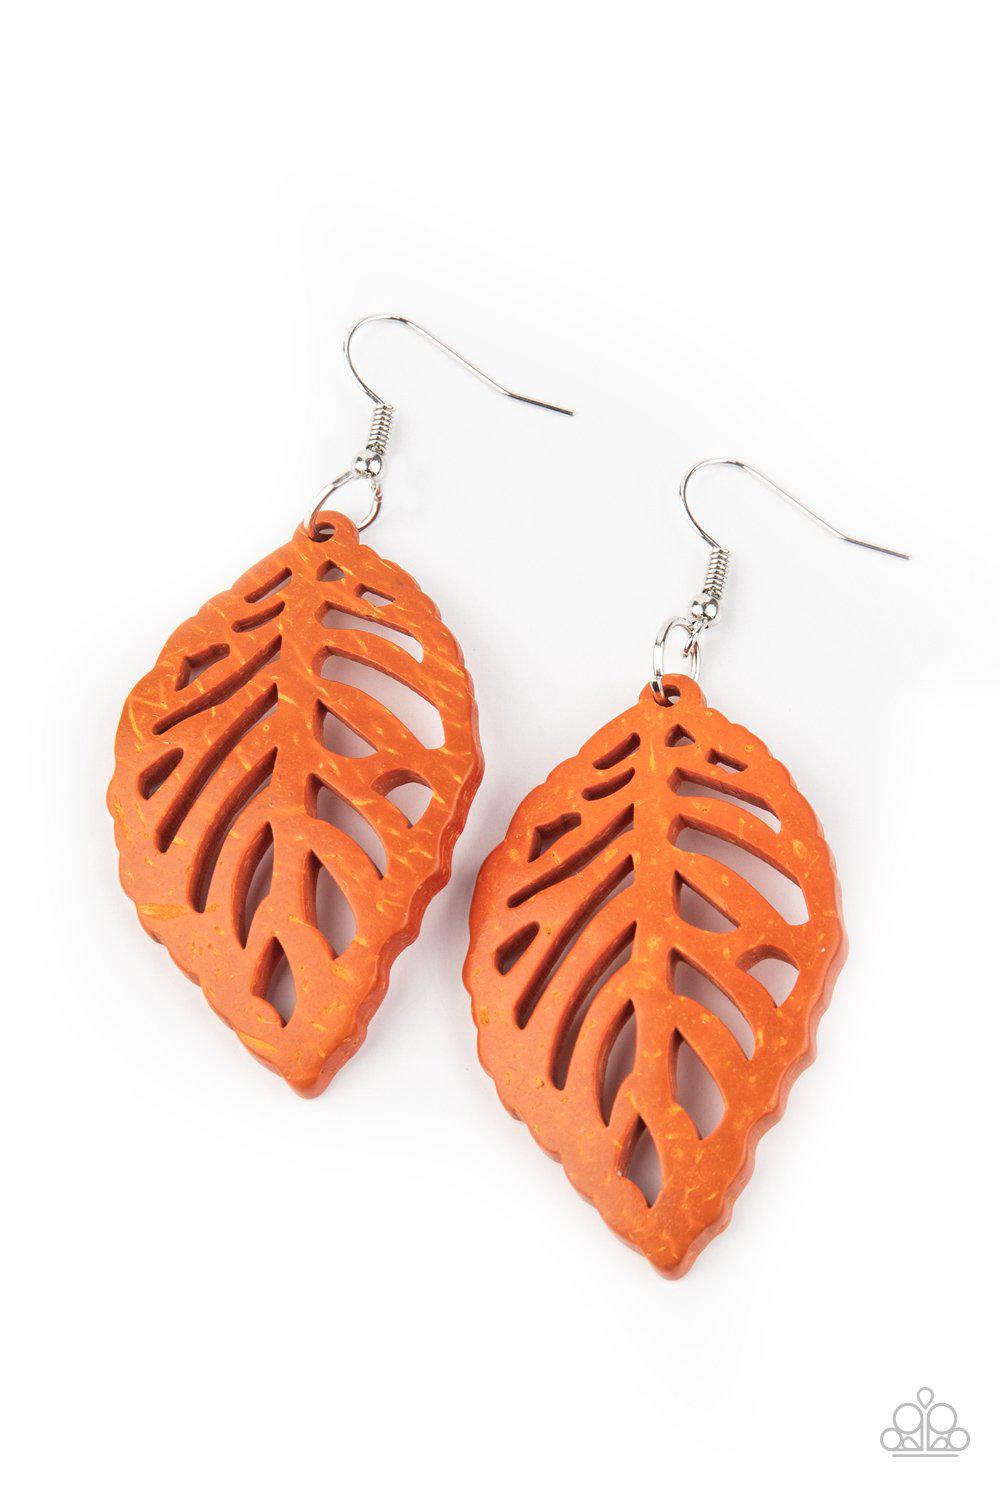 LEAF Em Hanging Orange Wood Leaf Earrings - Paparazzi Accessories - lightbox -CarasShop.com - $5 Jewelry by Cara Jewels